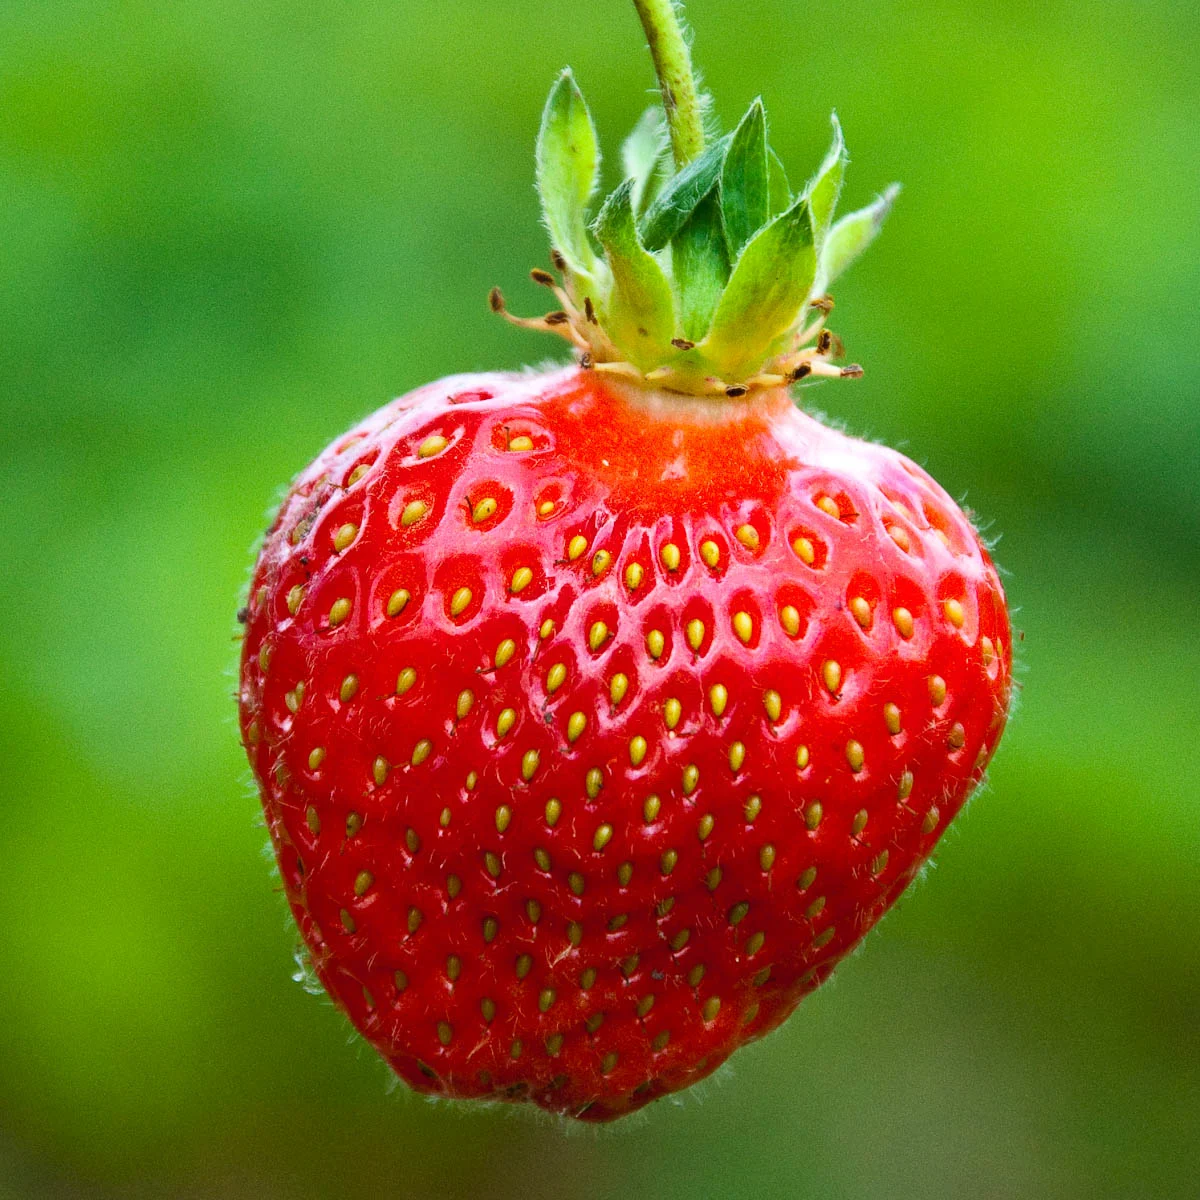 Strawberry, England - www.rossiwrites.com